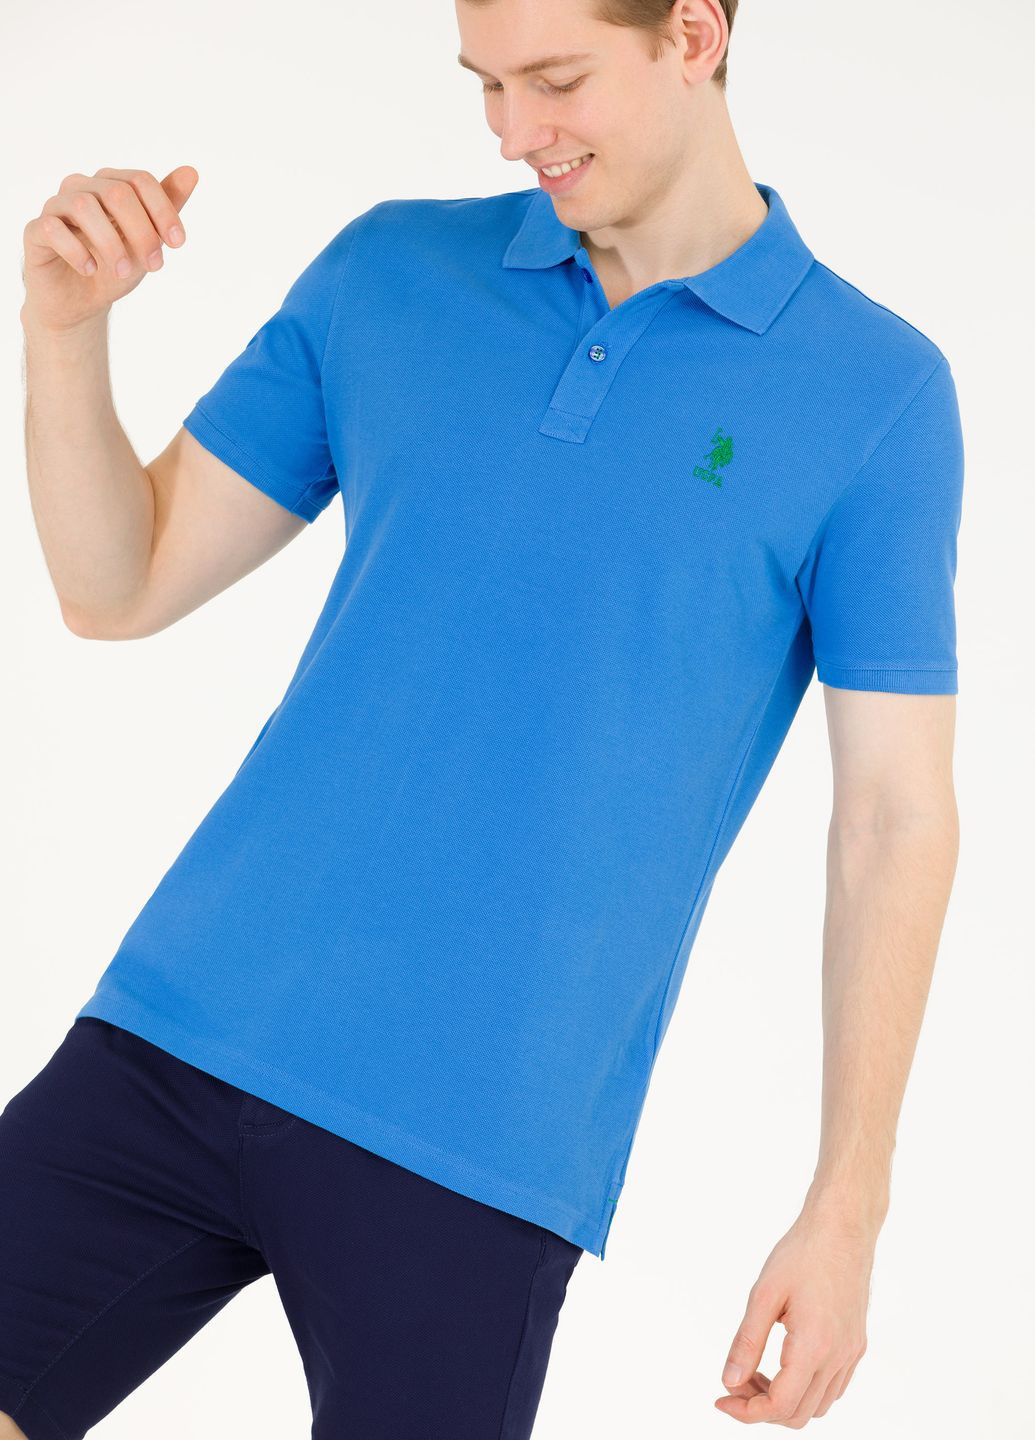 Синяя футболка-футболка поло мужская для мужчин U.S. Polo Assn.